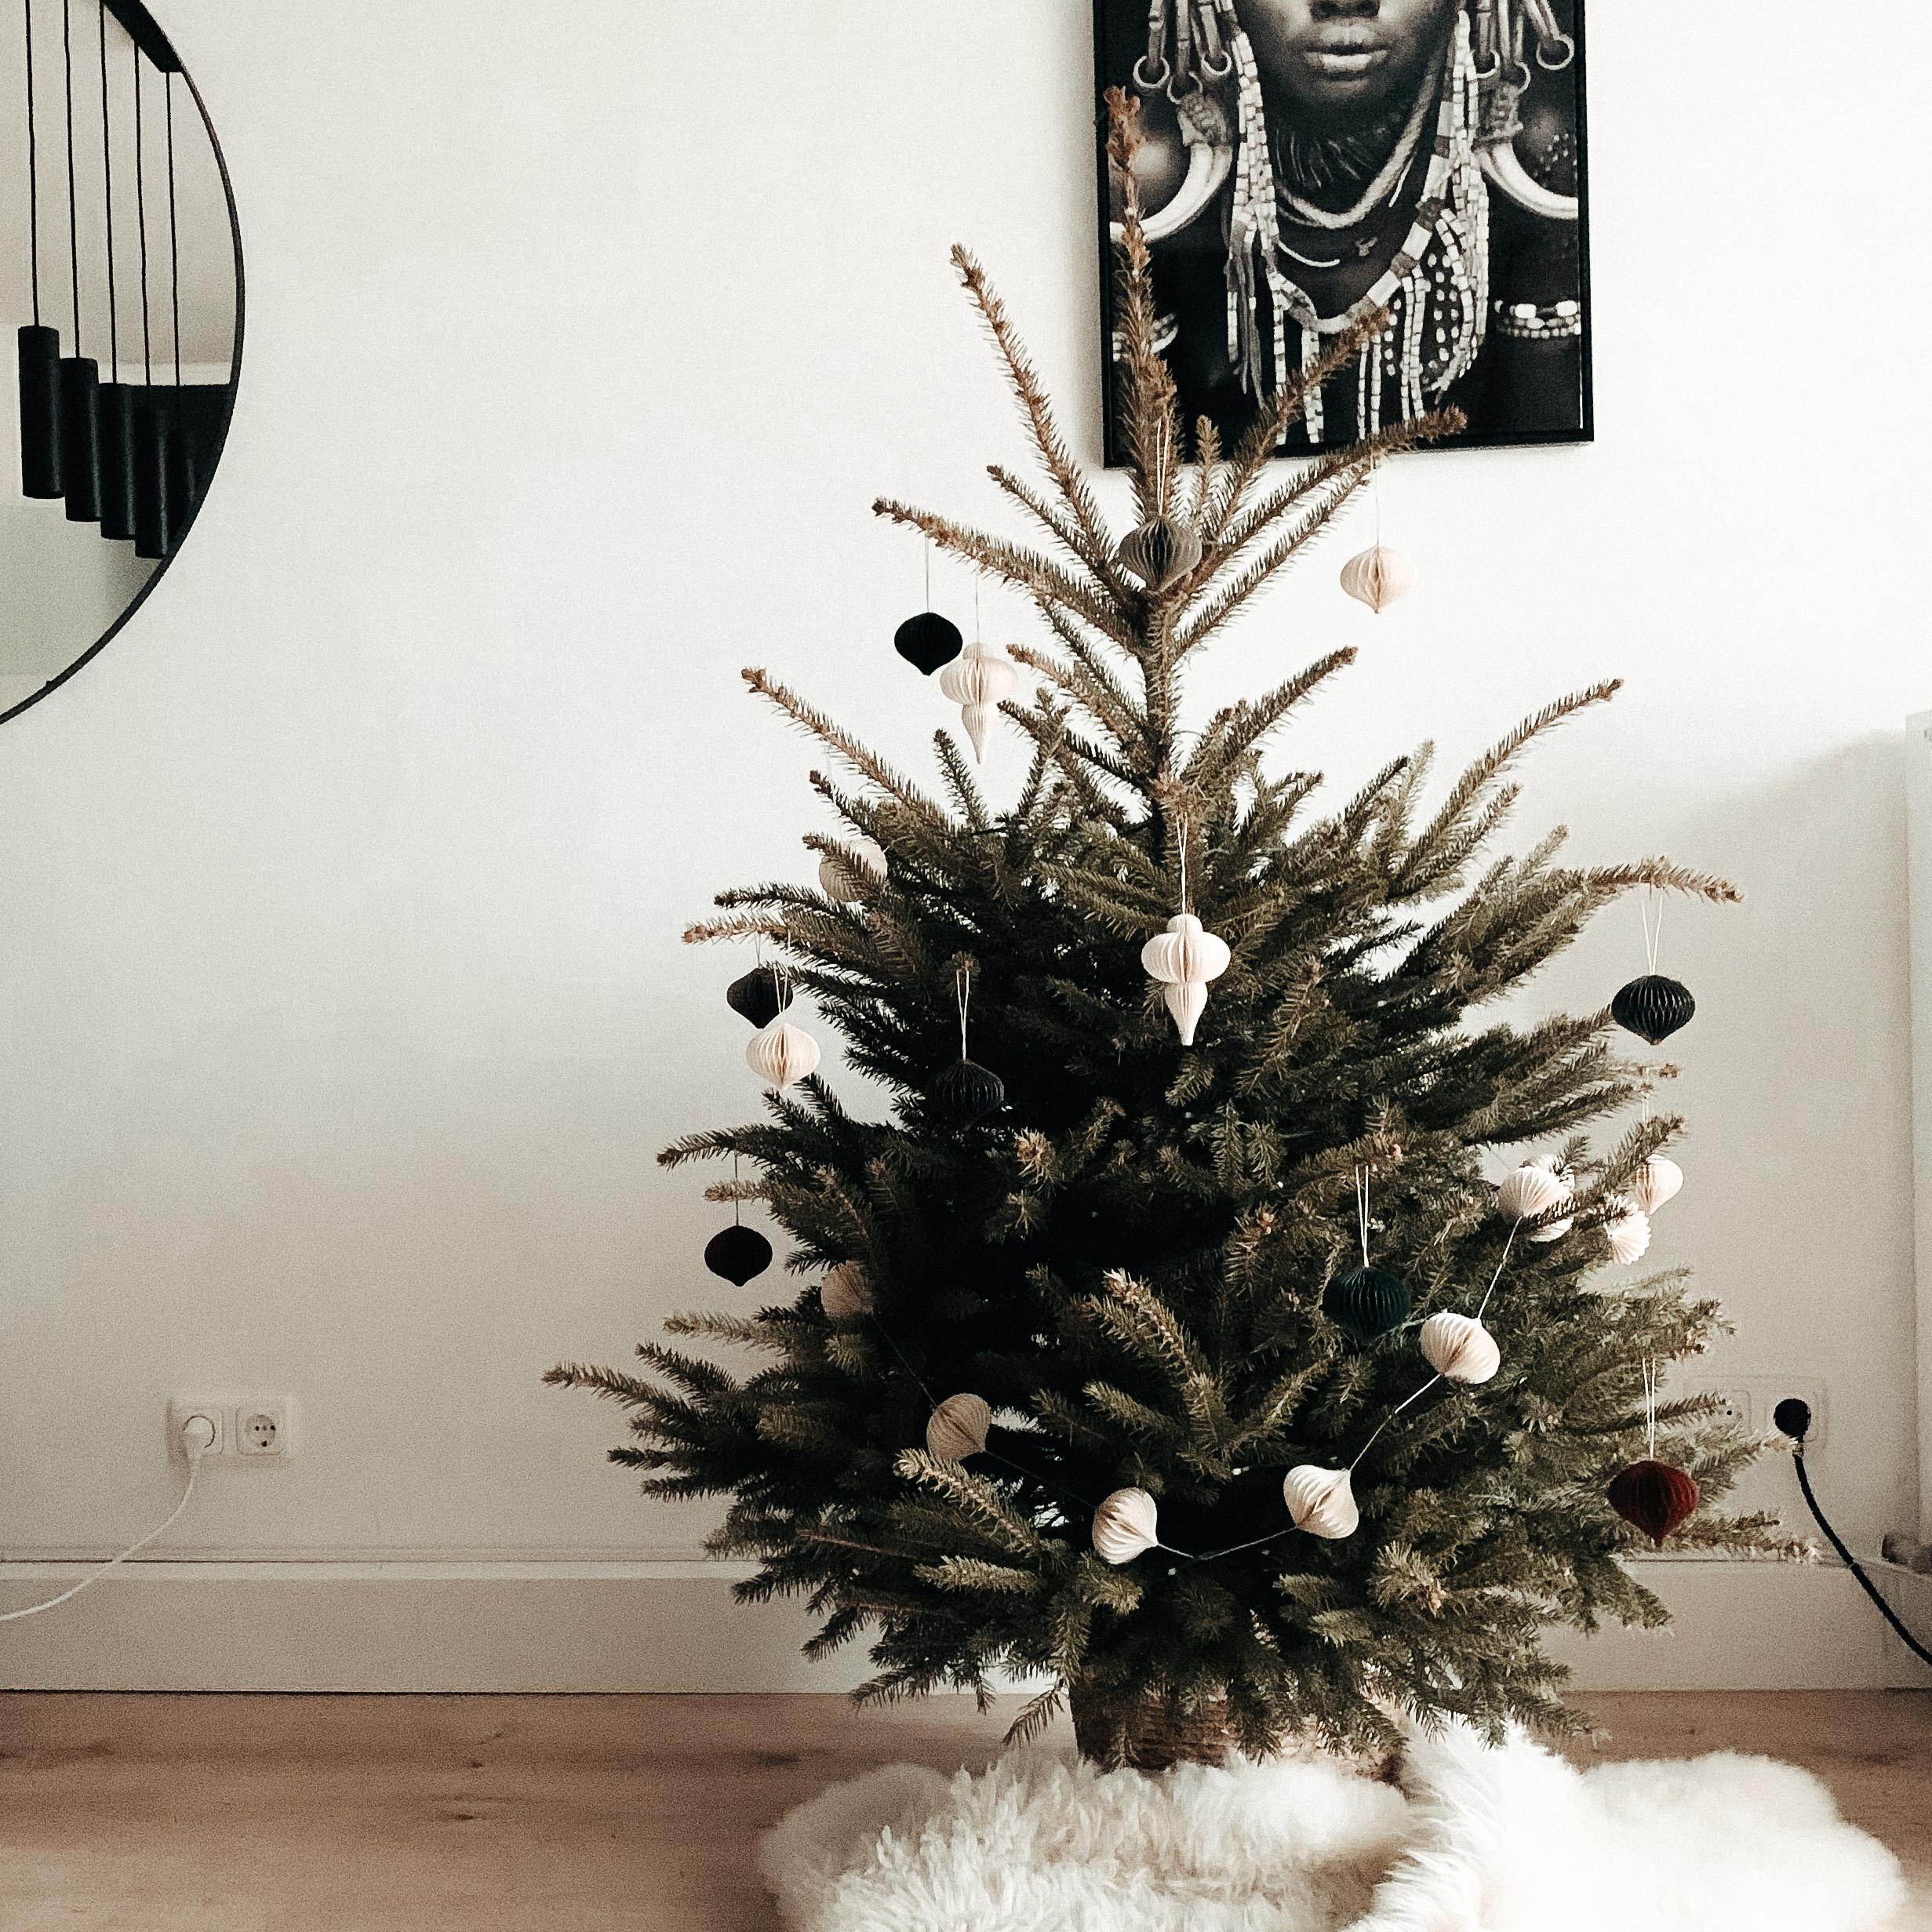 Oh Christmas tree 🎄 #christmastree #weihnachtsbaum #weihnachten #christmas #hyggechristmas #skandi #skandiweihnachten